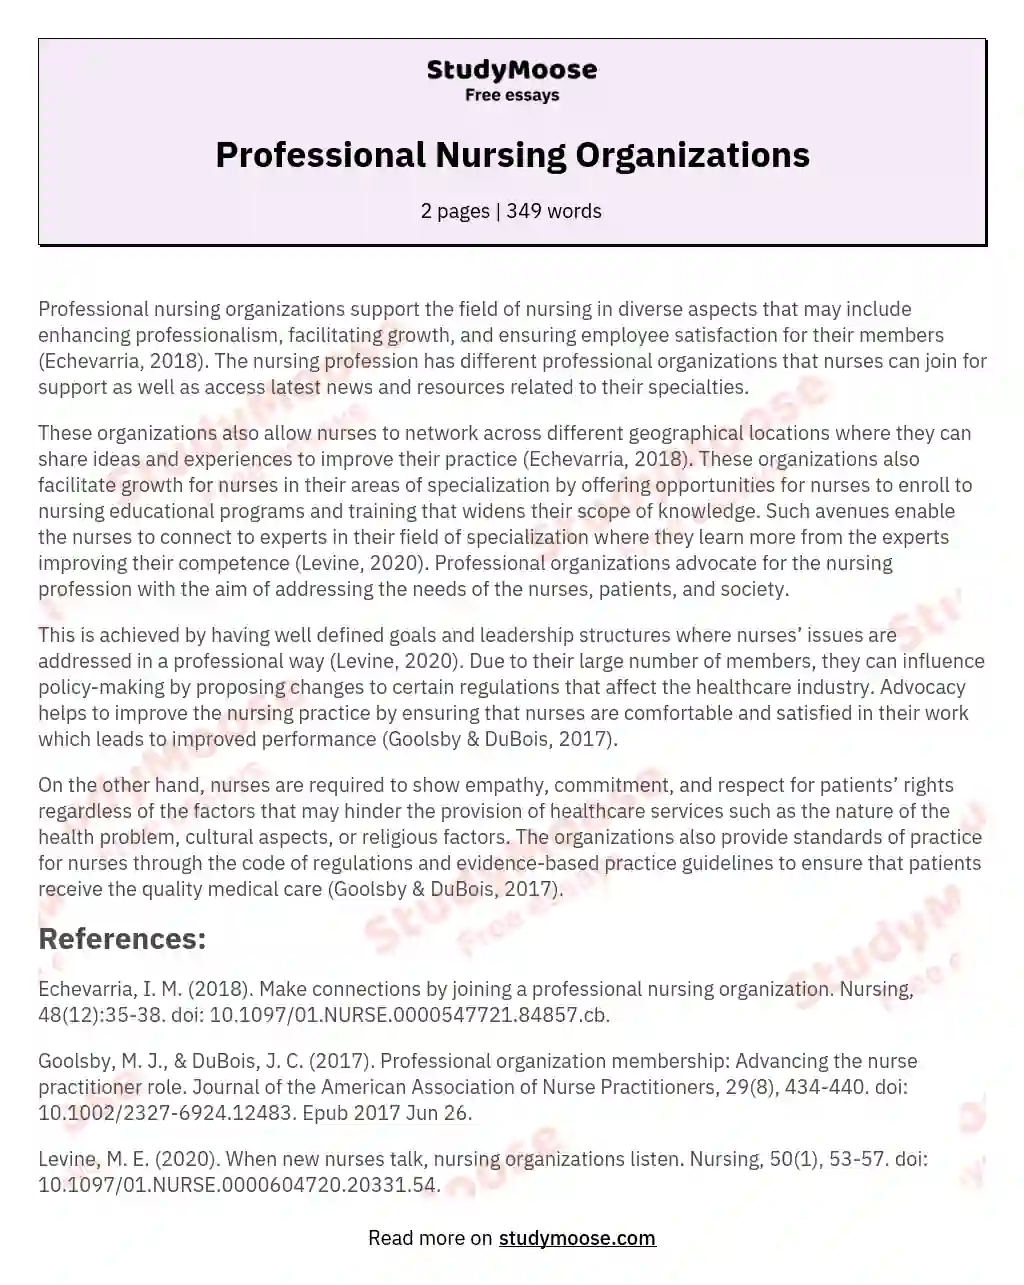 Professional Nursing Organizations essay